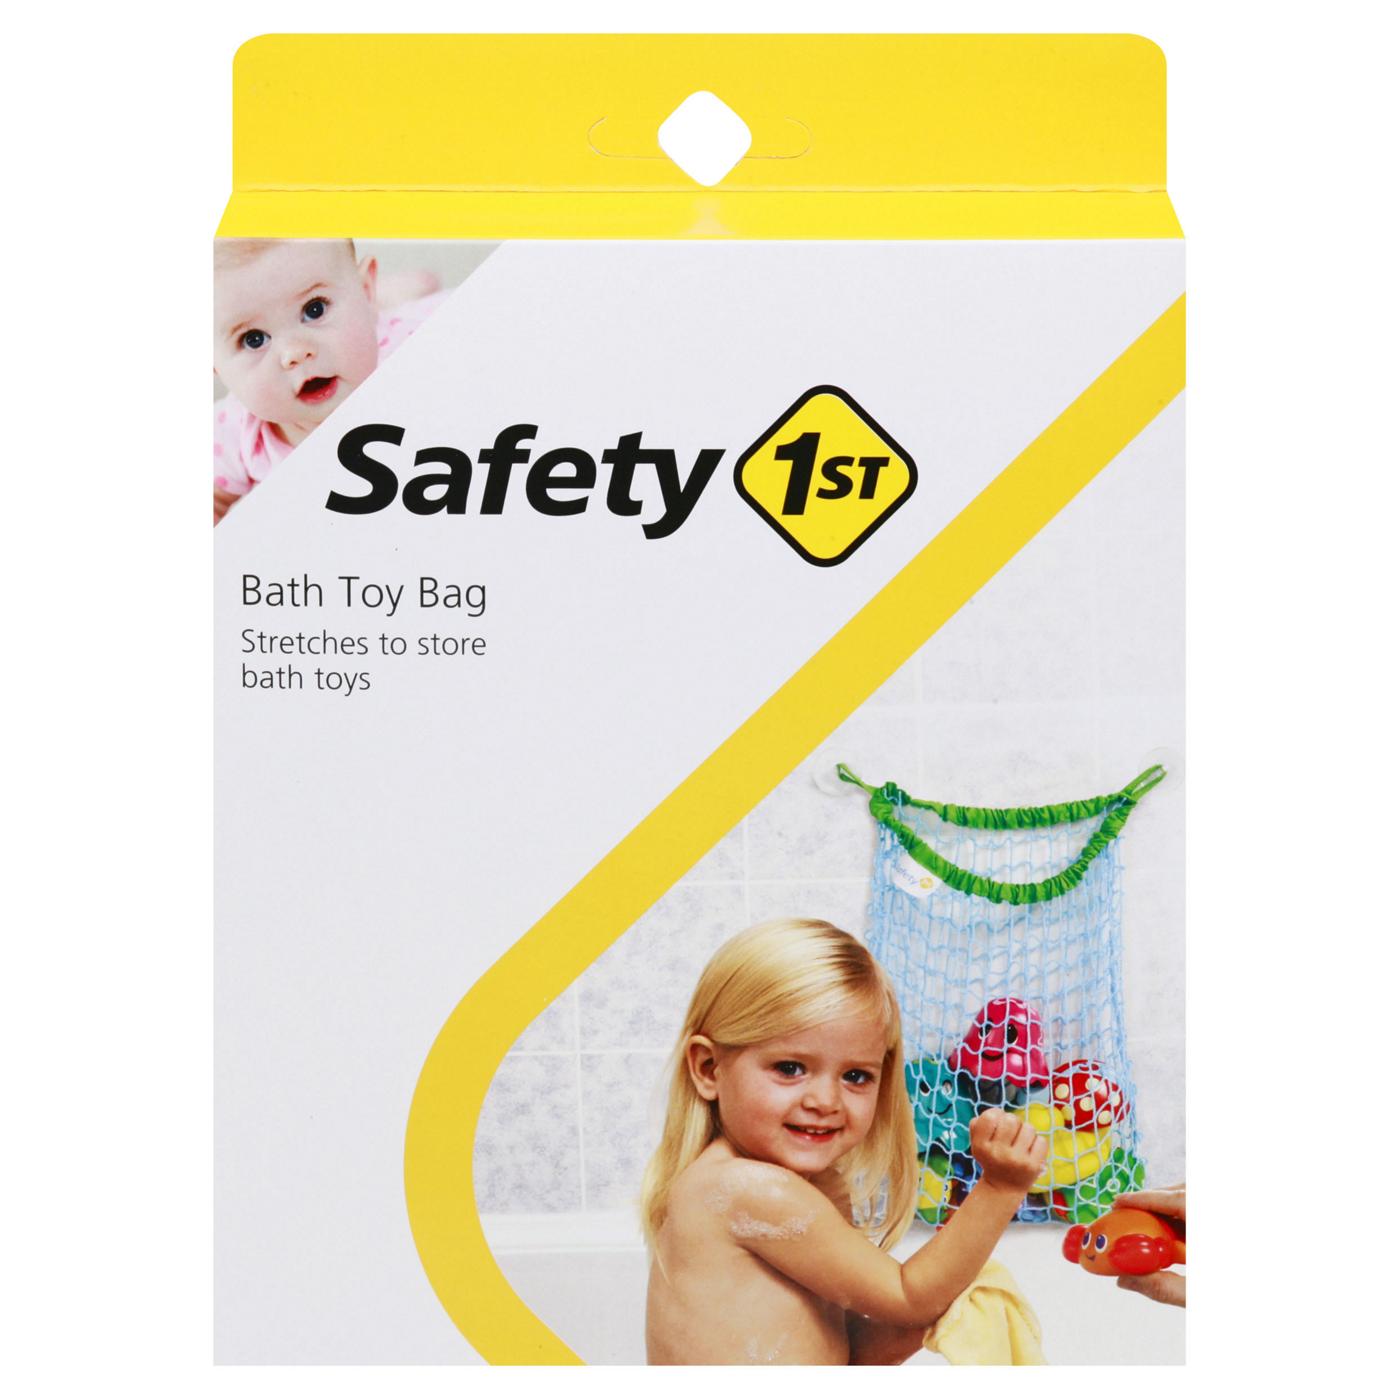 Safety 1st Bath Toy Bag; image 1 of 2